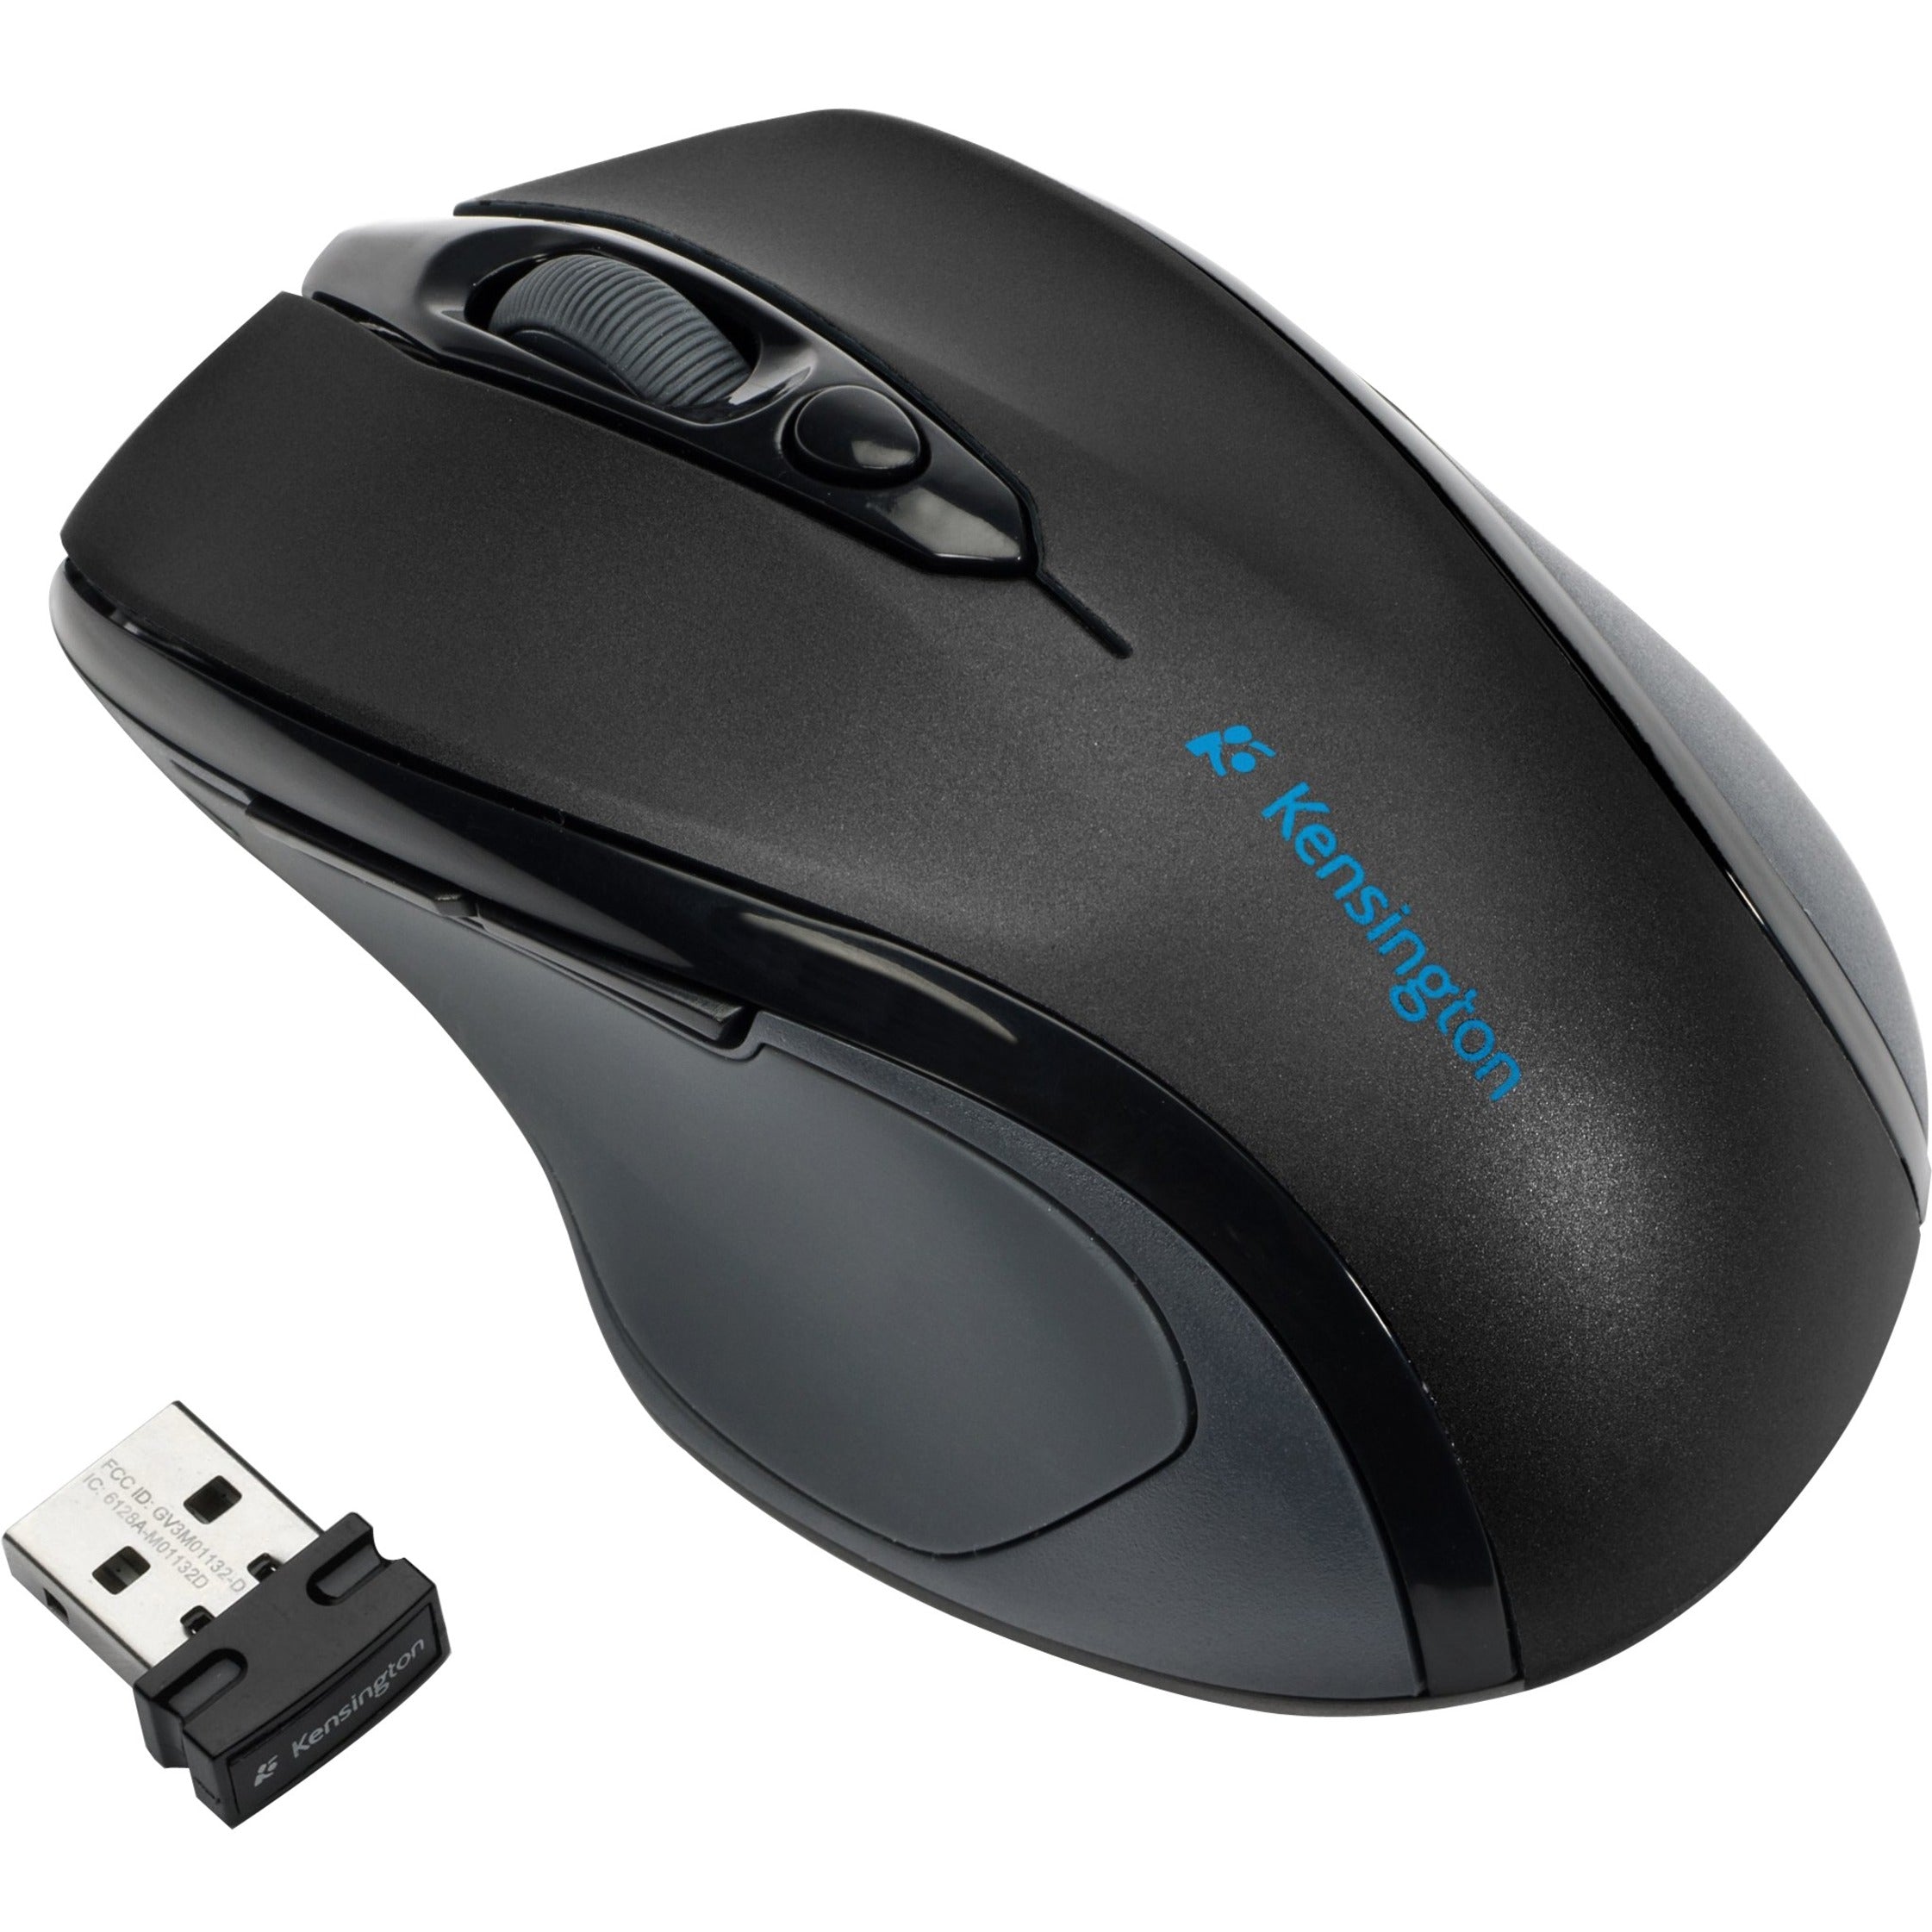 Kensington K72405USA Pro Fit Wireless Mid-Size Mouse, 3 Year Warranty, Ergonomic Design, 1600 DPI, USB Receiver